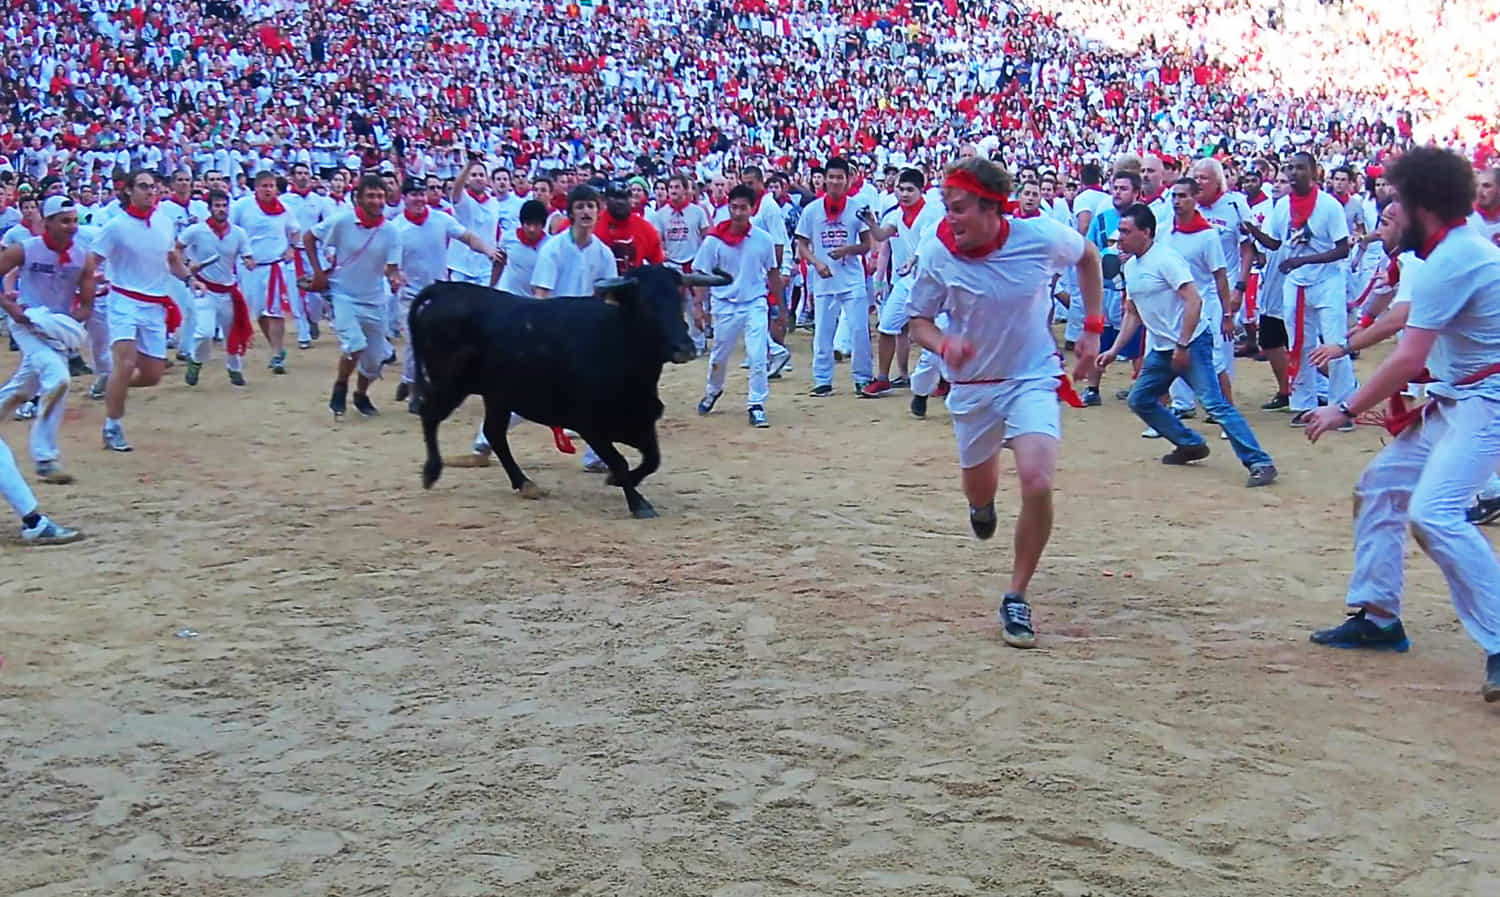 San Fermin Attire for the Running of the Bulls